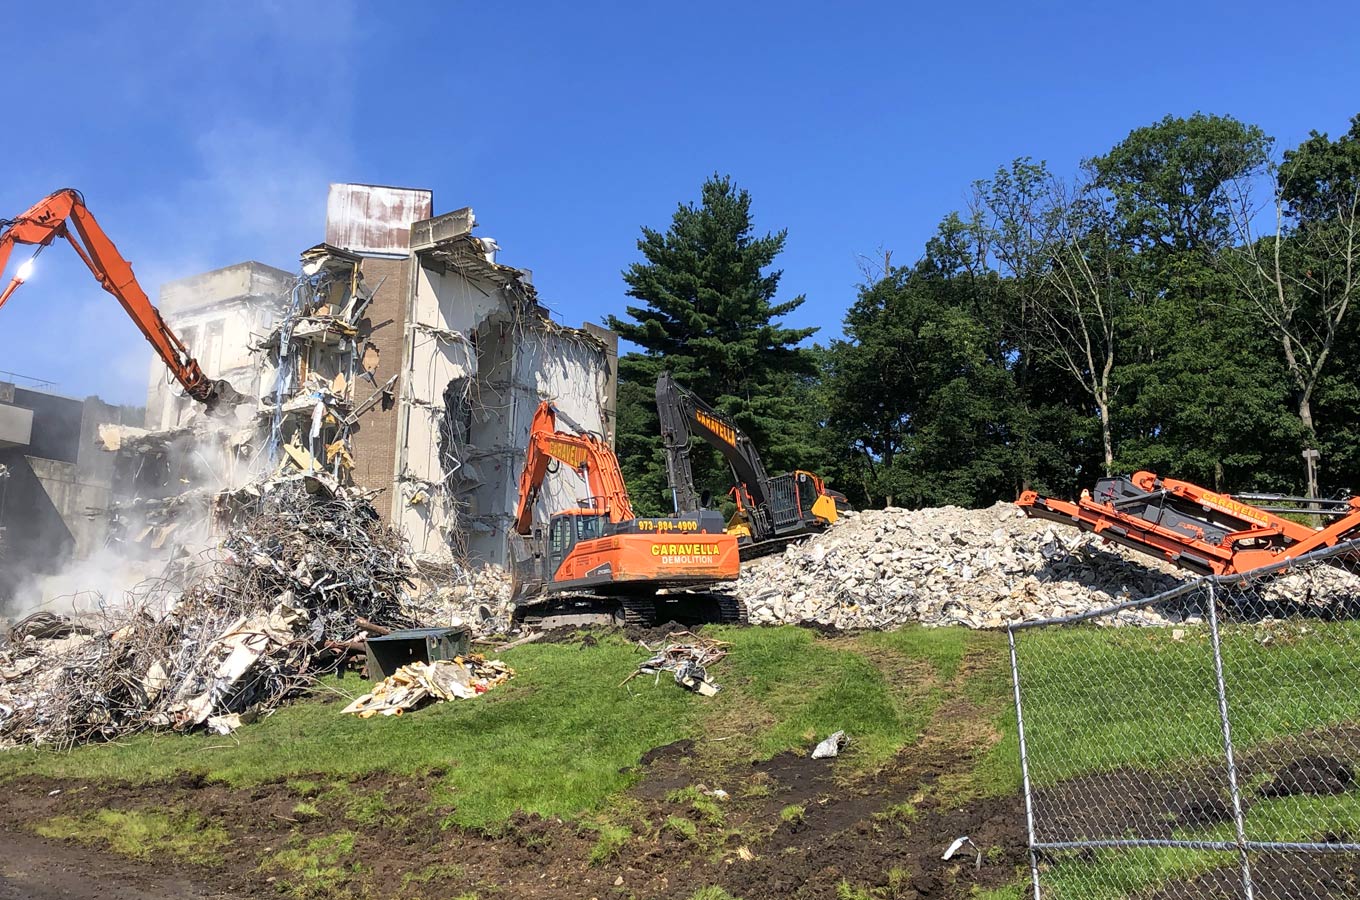 Demolition Services in Passaic, NJ 07055 | Caravella Demolition